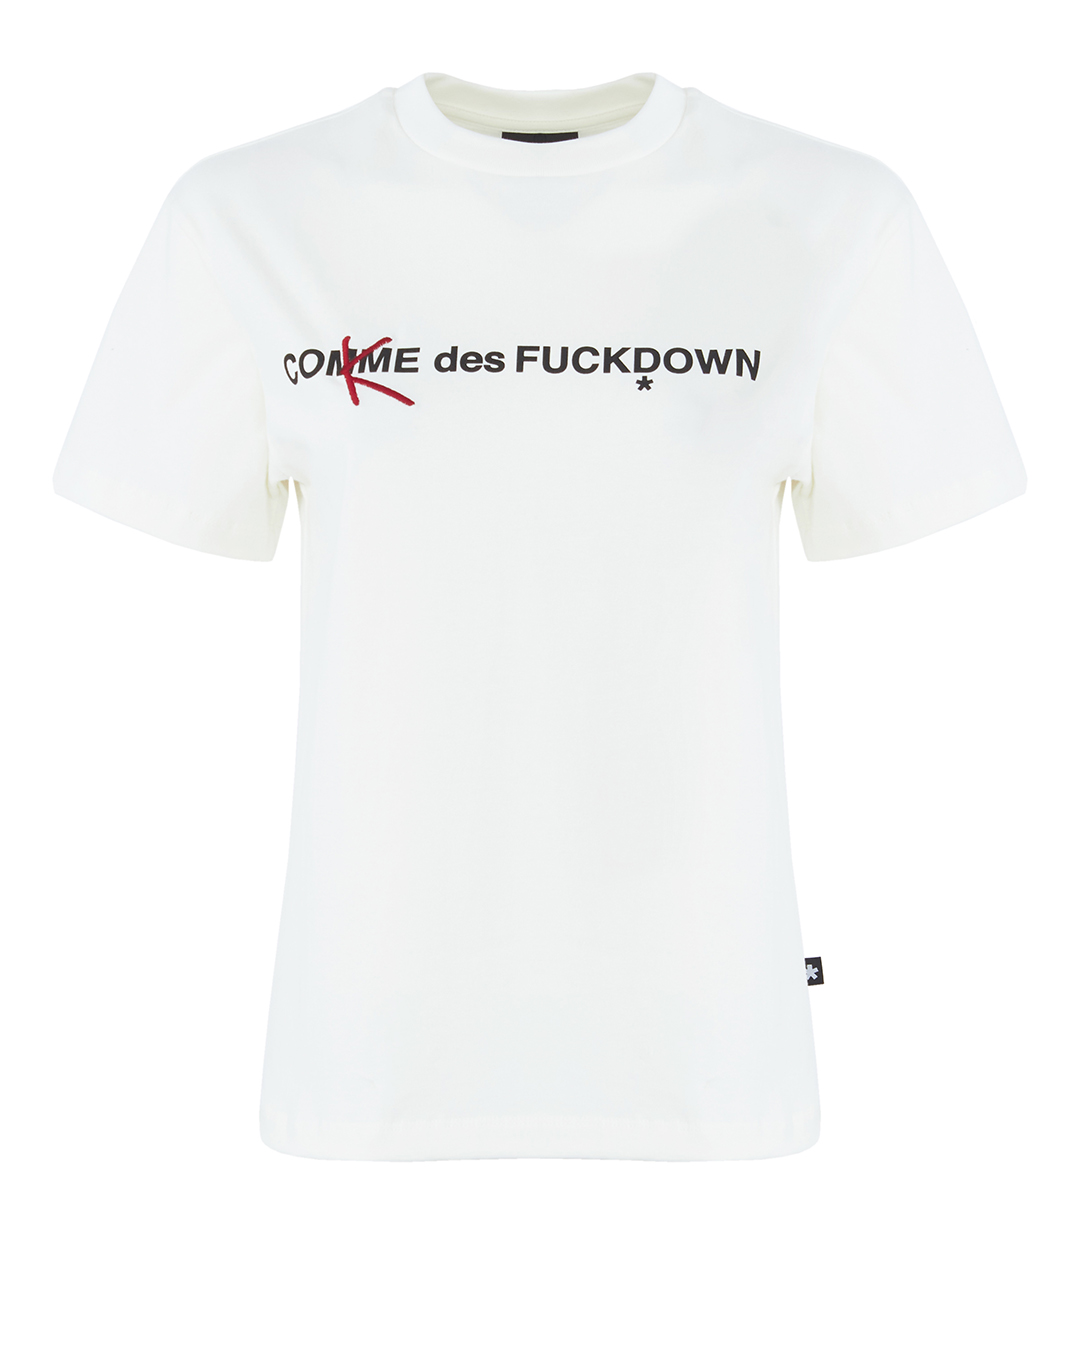 COMME des FUCKDOWN с логотипом бренда  артикул  марки COMME des FUCKDOWN купить за 6100 руб.